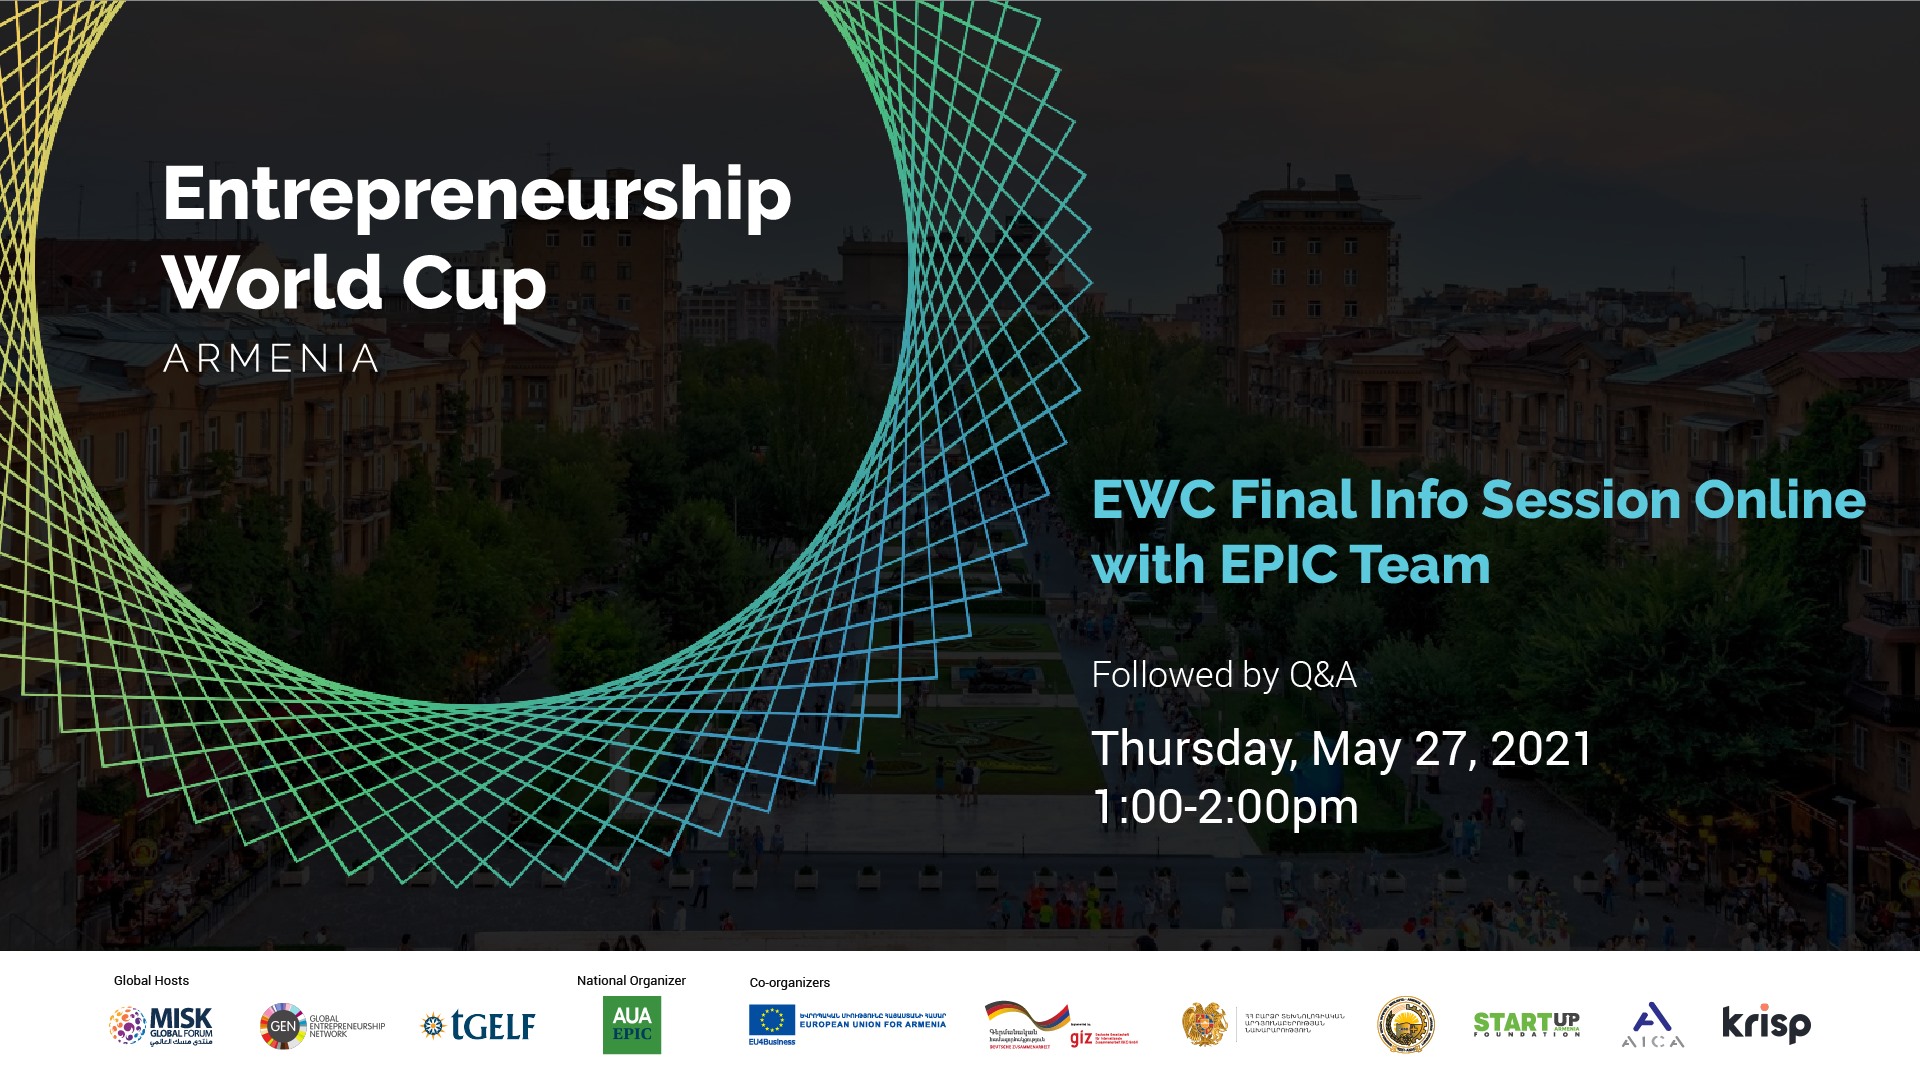 Entrepreneurship World Cup Final Online Info Session